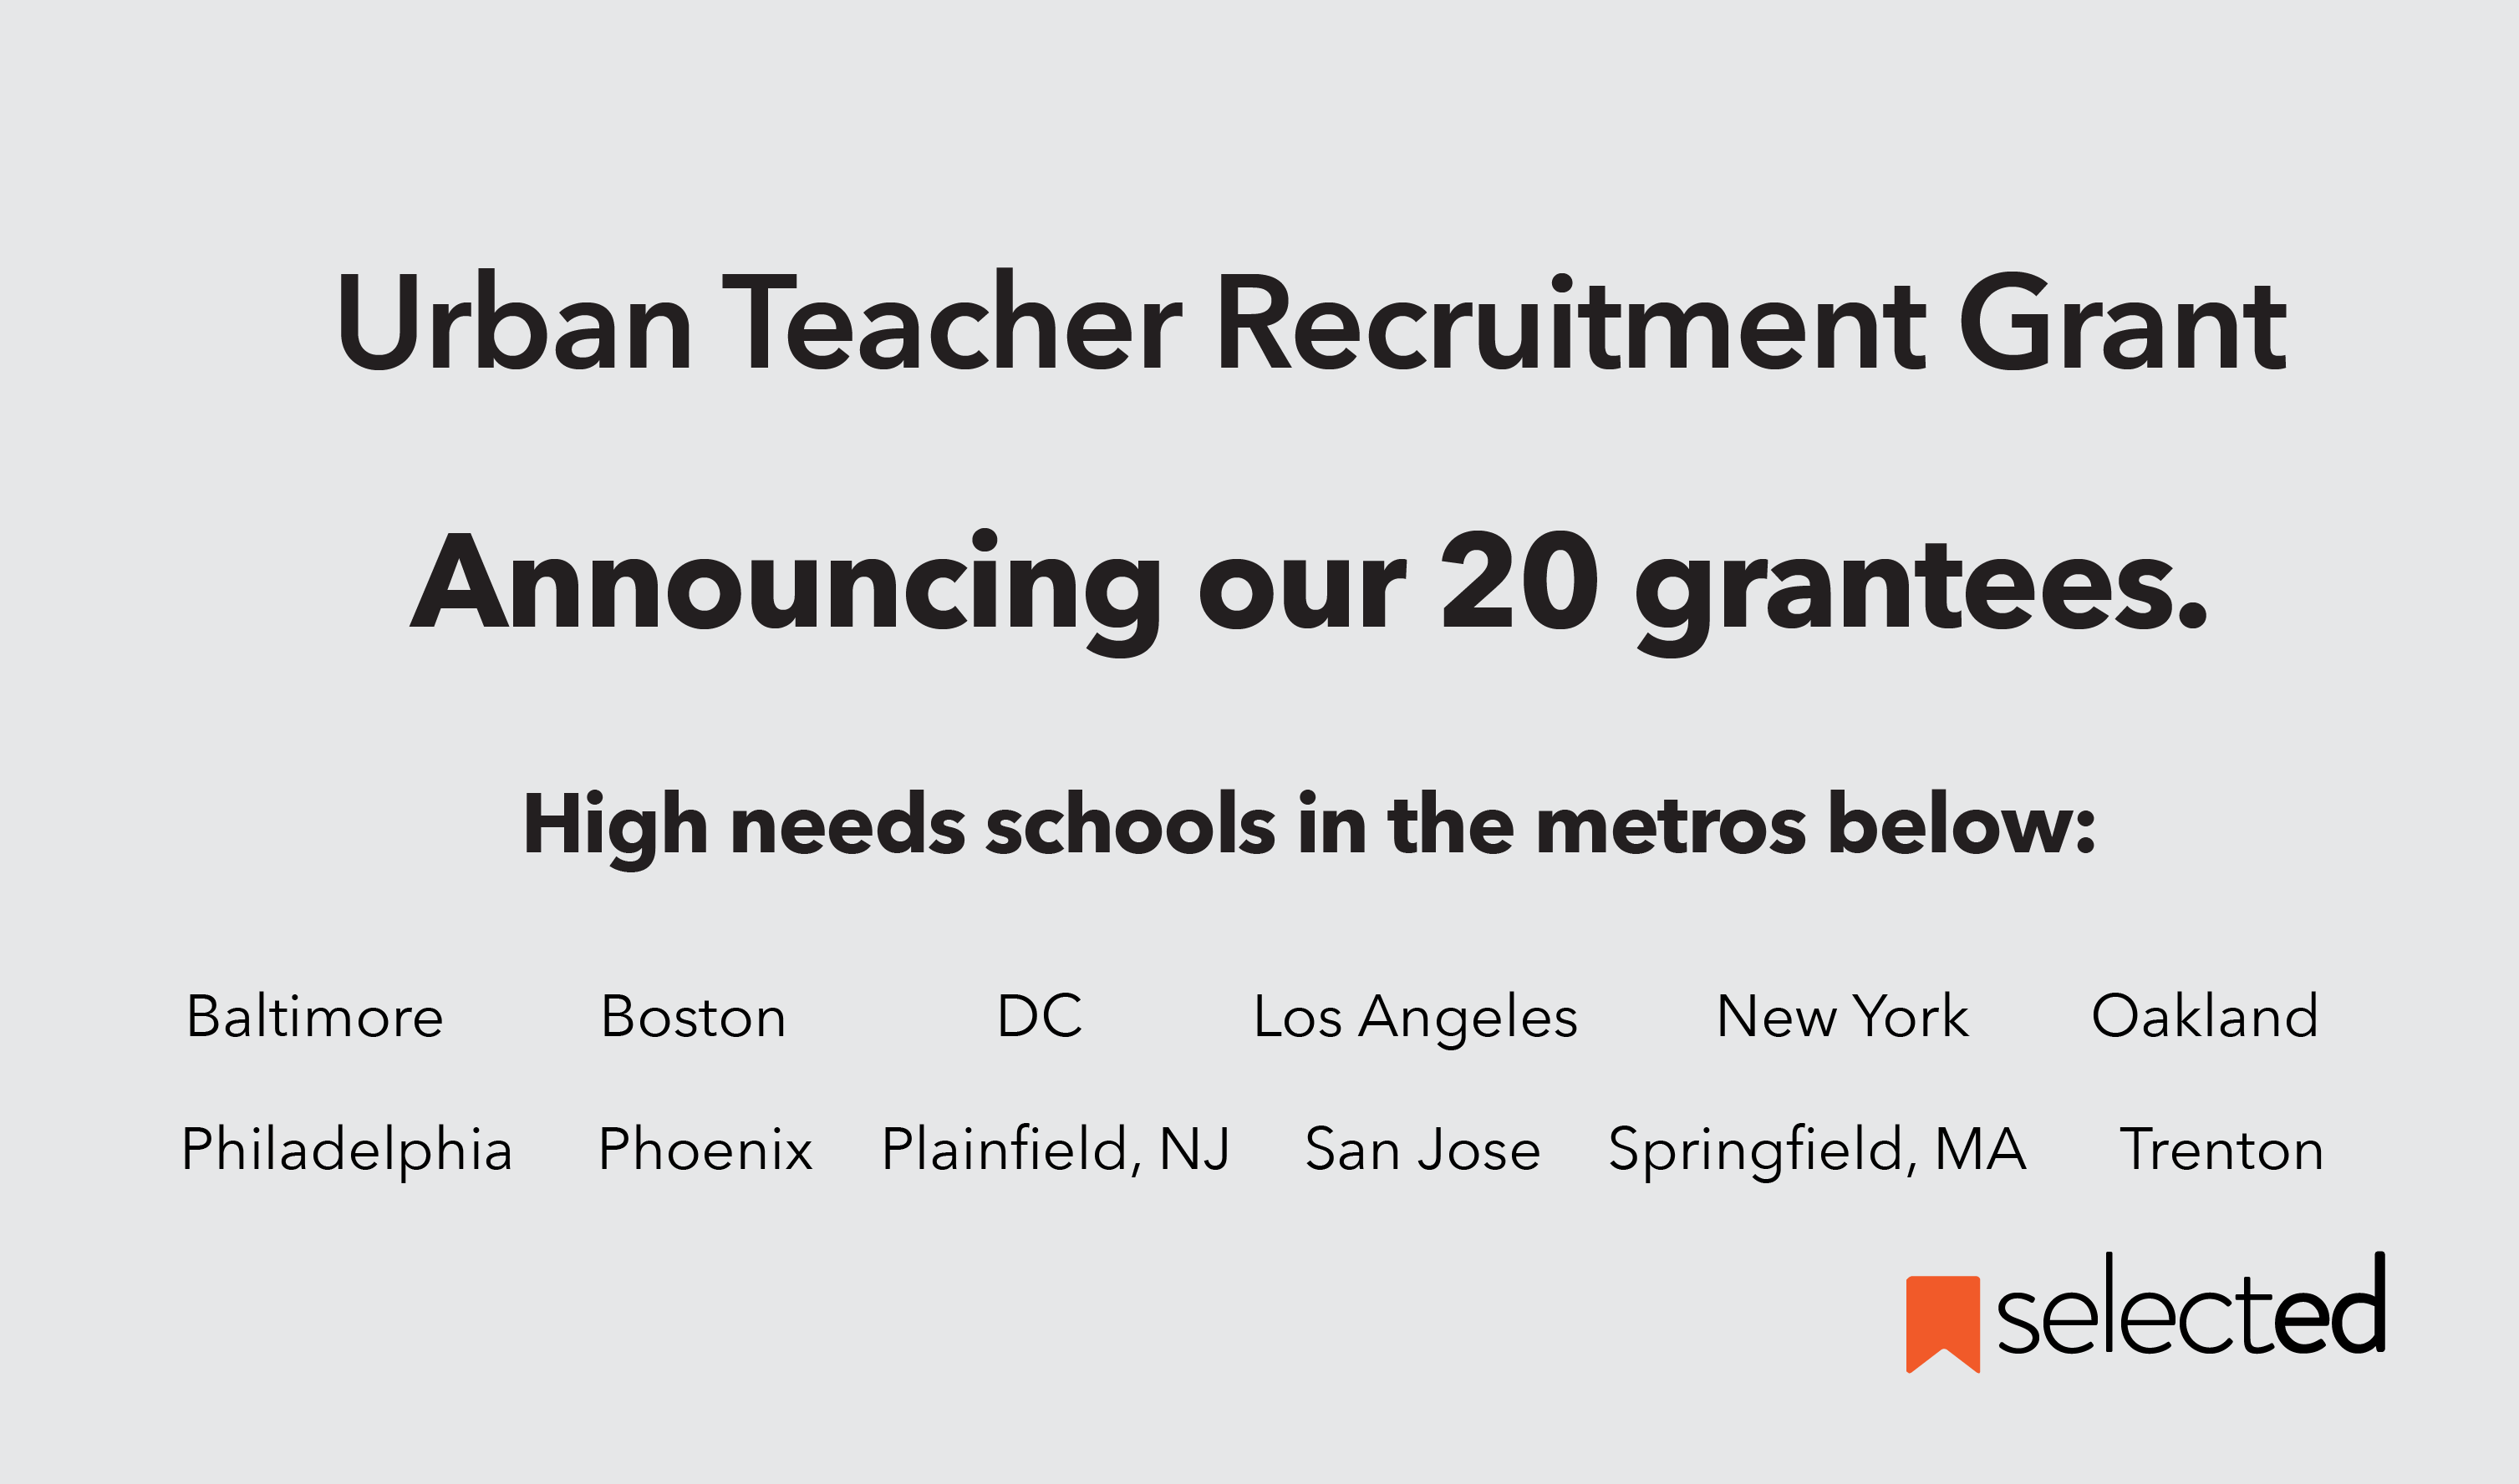 Awardees of the 2020 Urban Teacher Recruitment Grant